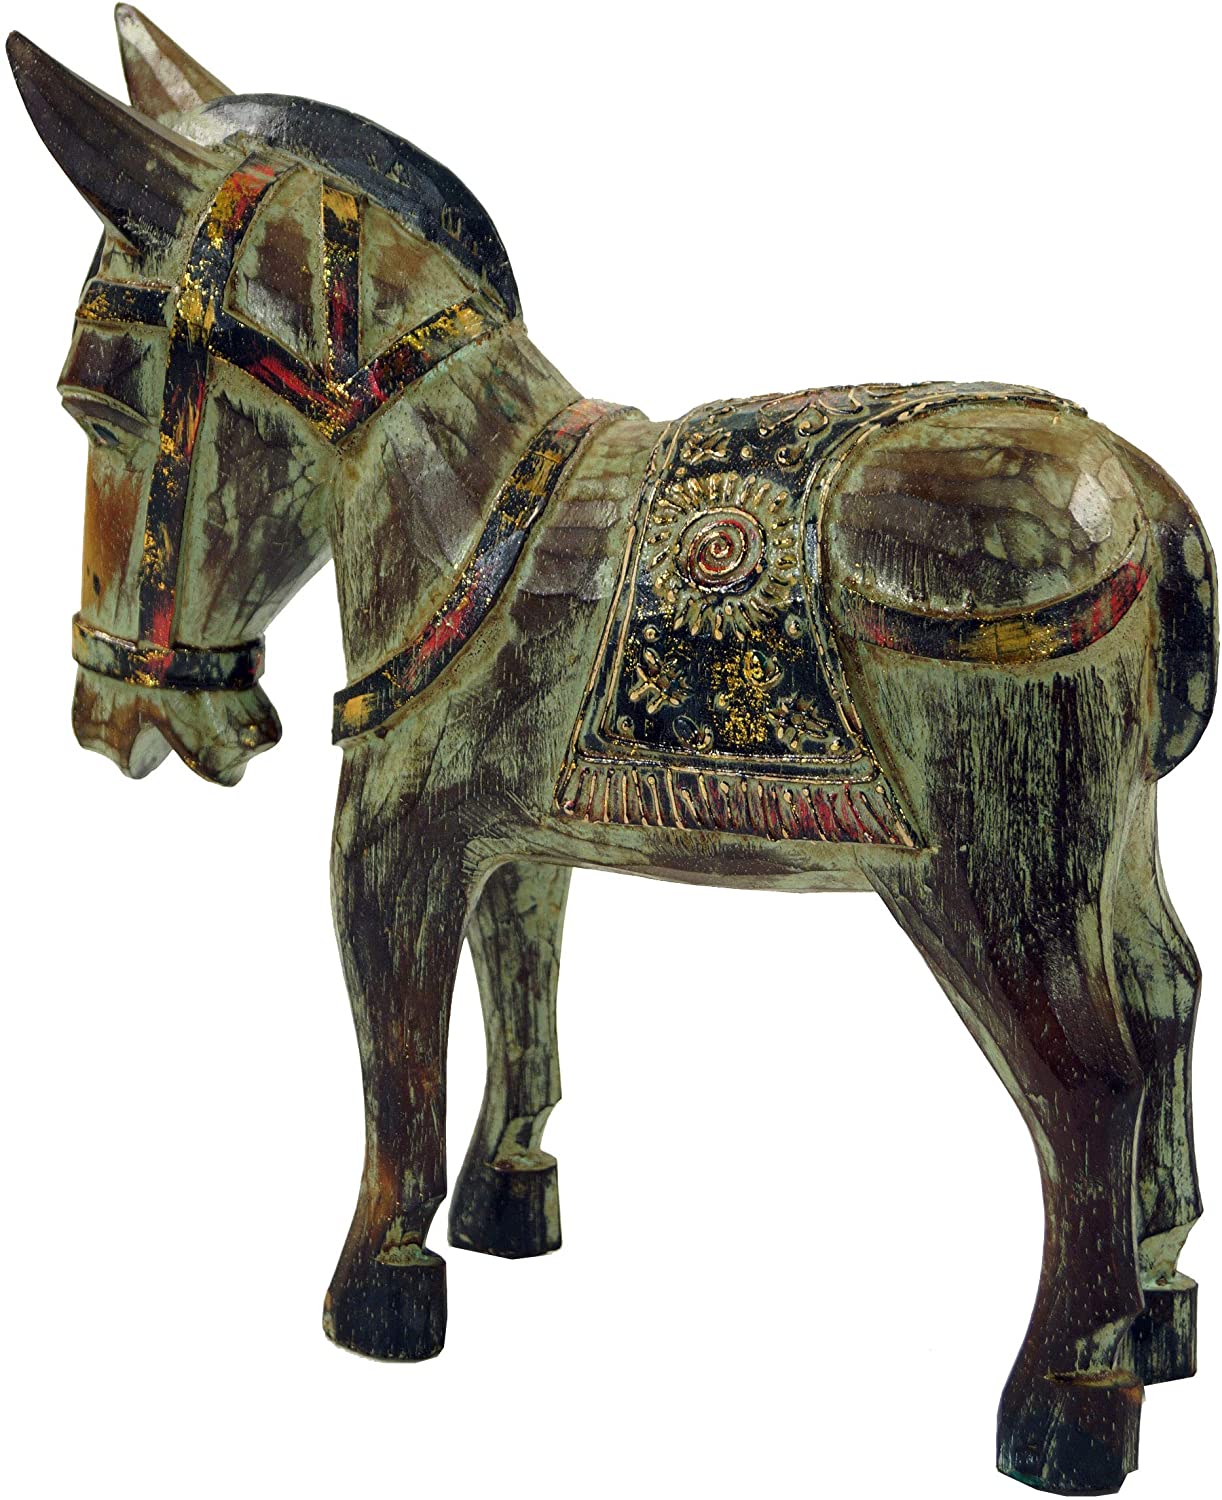 Guru-Shop Design 1 Carved Horse Decorative Object 52 x 40 x 12 cm Animal Fi